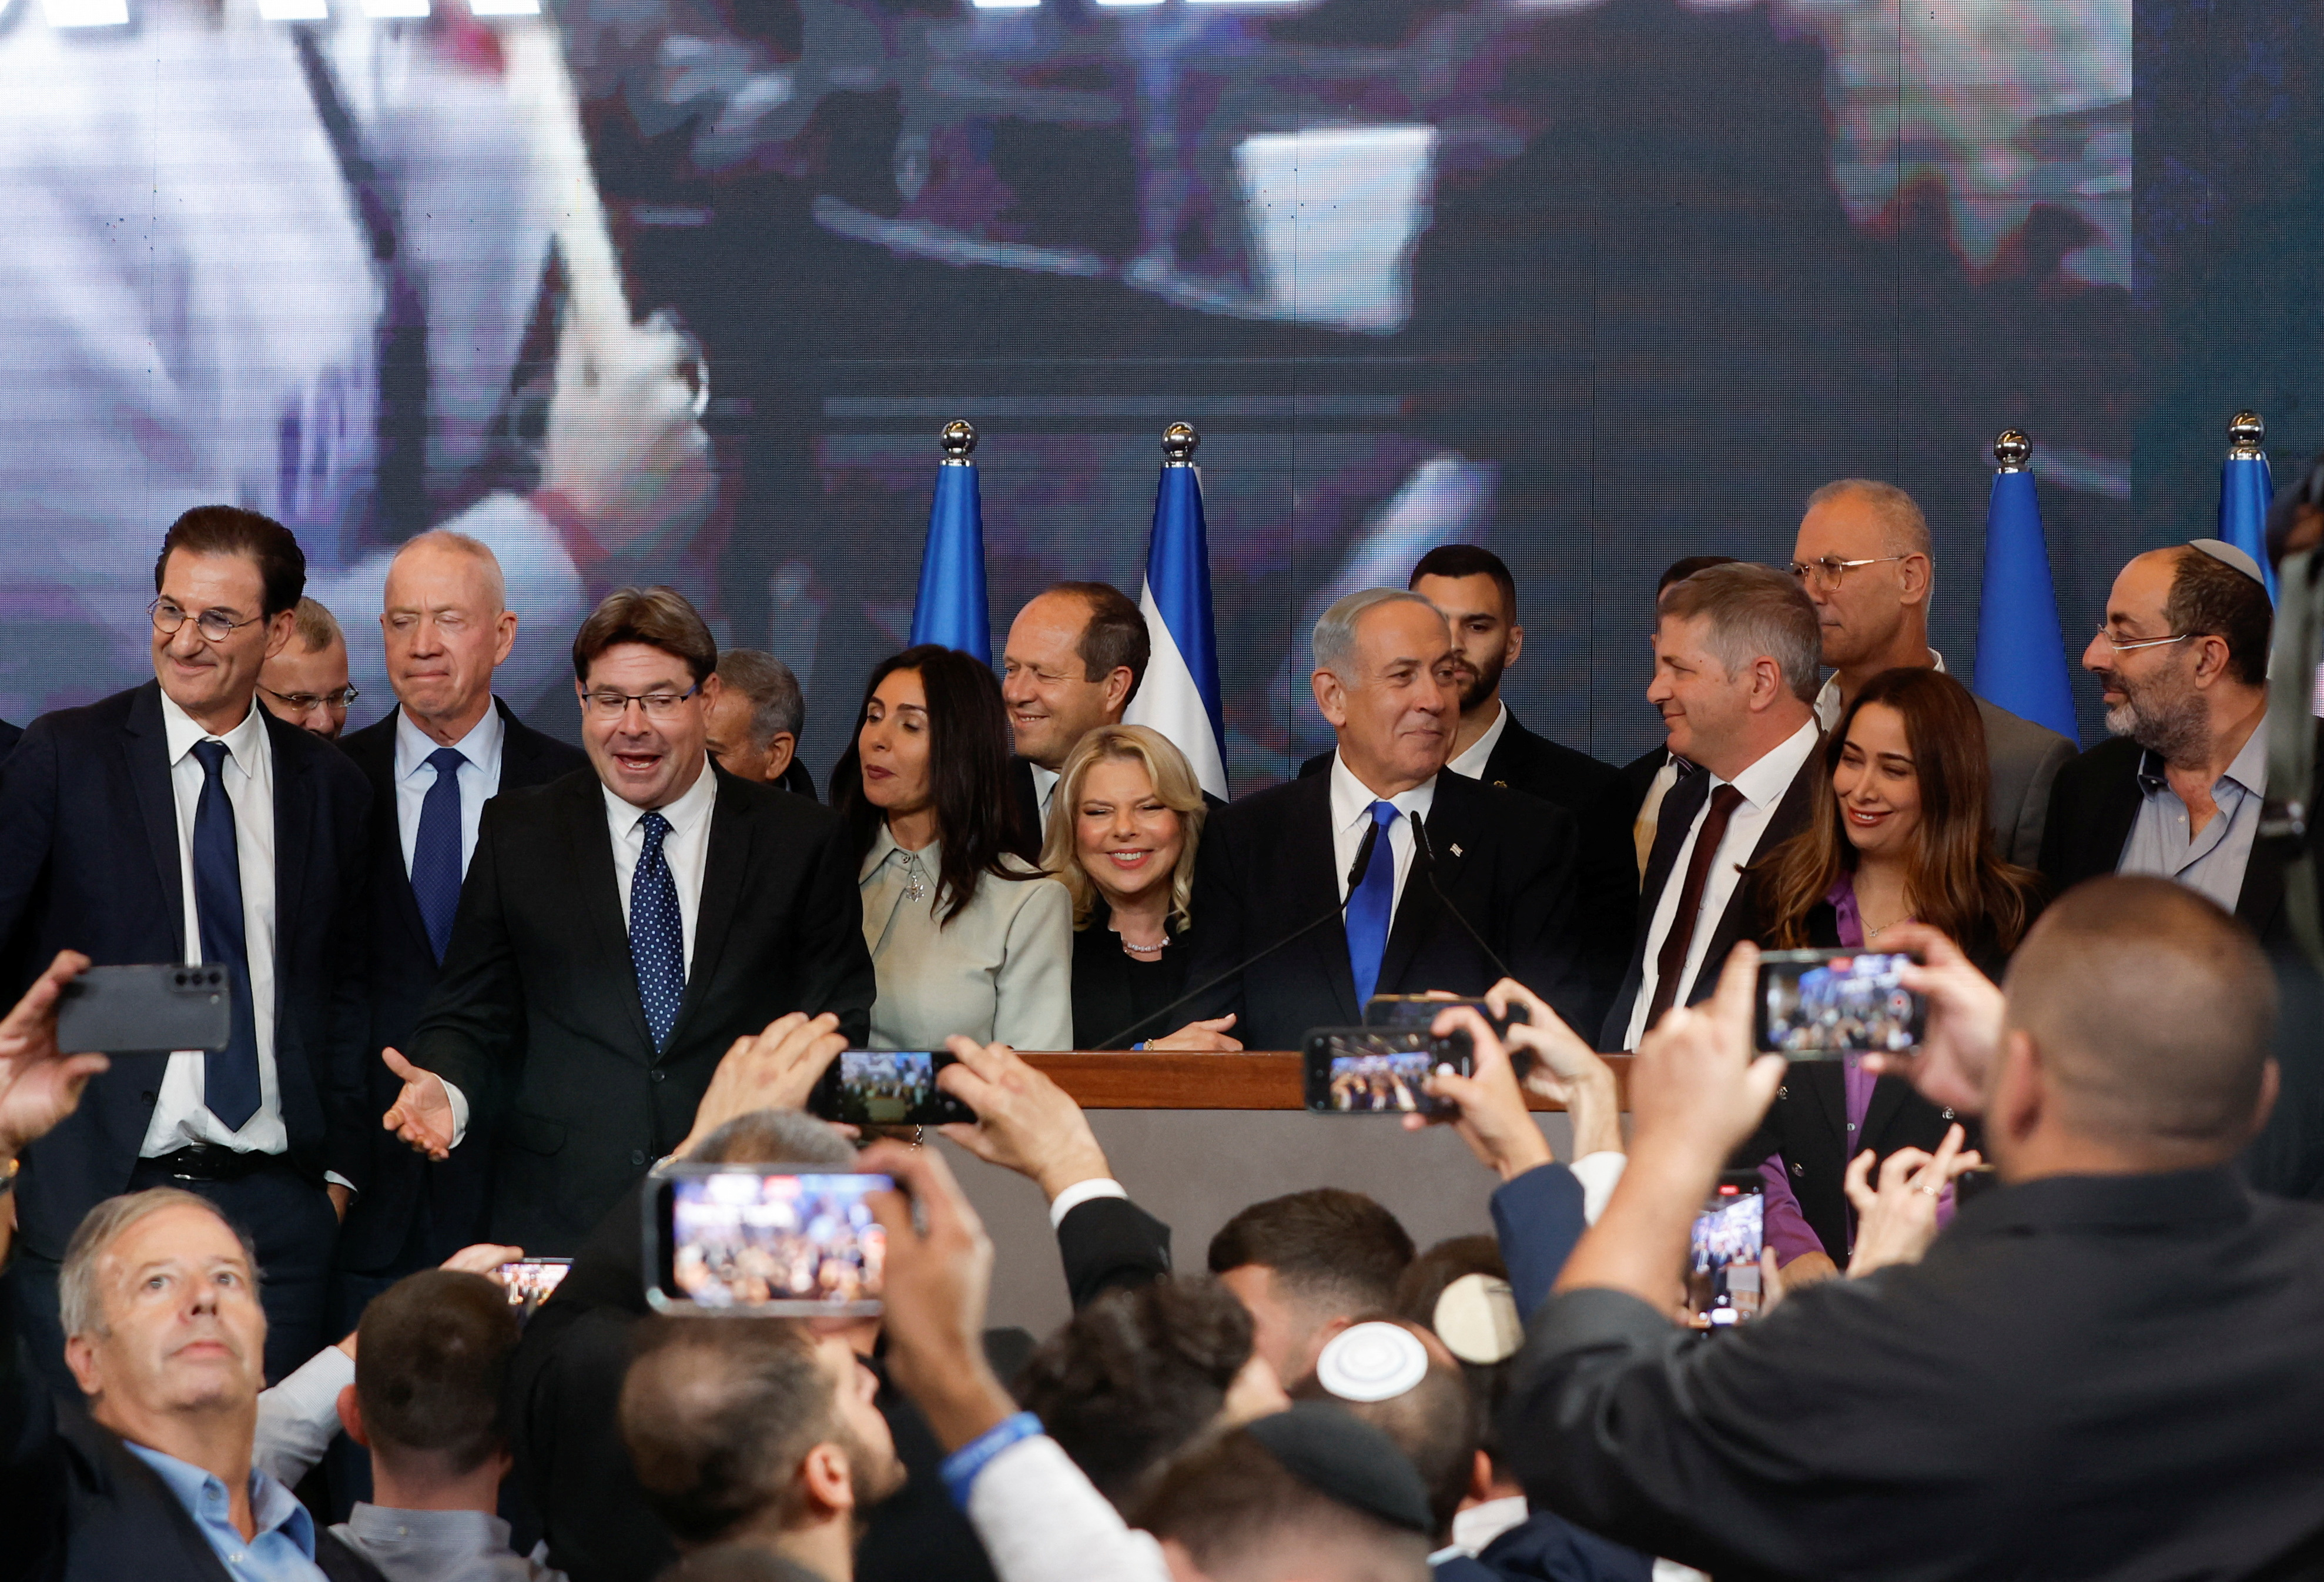 Netanyahu with his wife Sara and their entourage (Reuters)